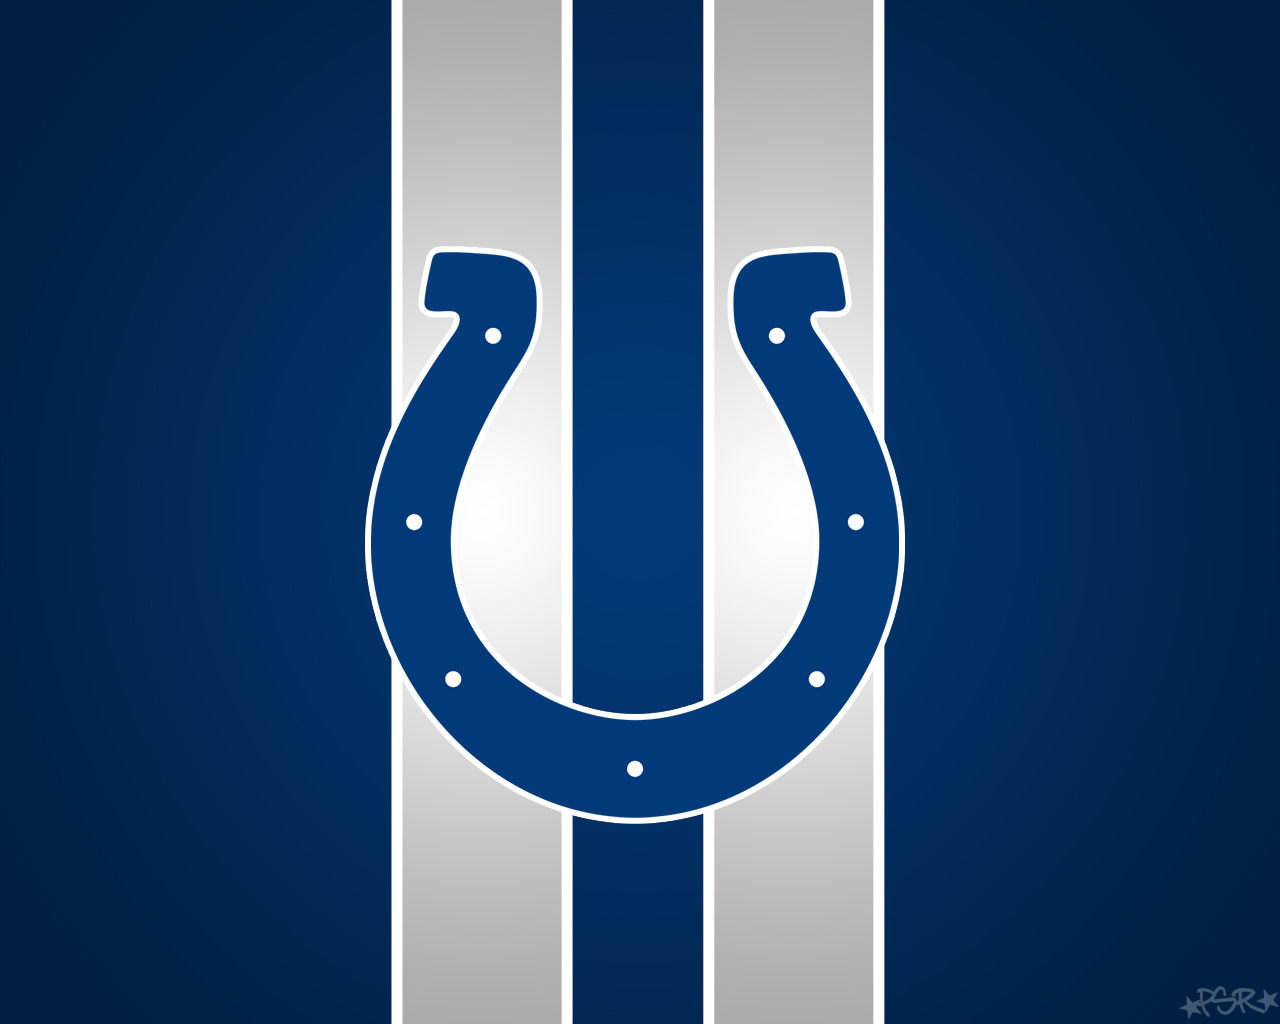 Indianapolis Colts Wallpaper Image Group